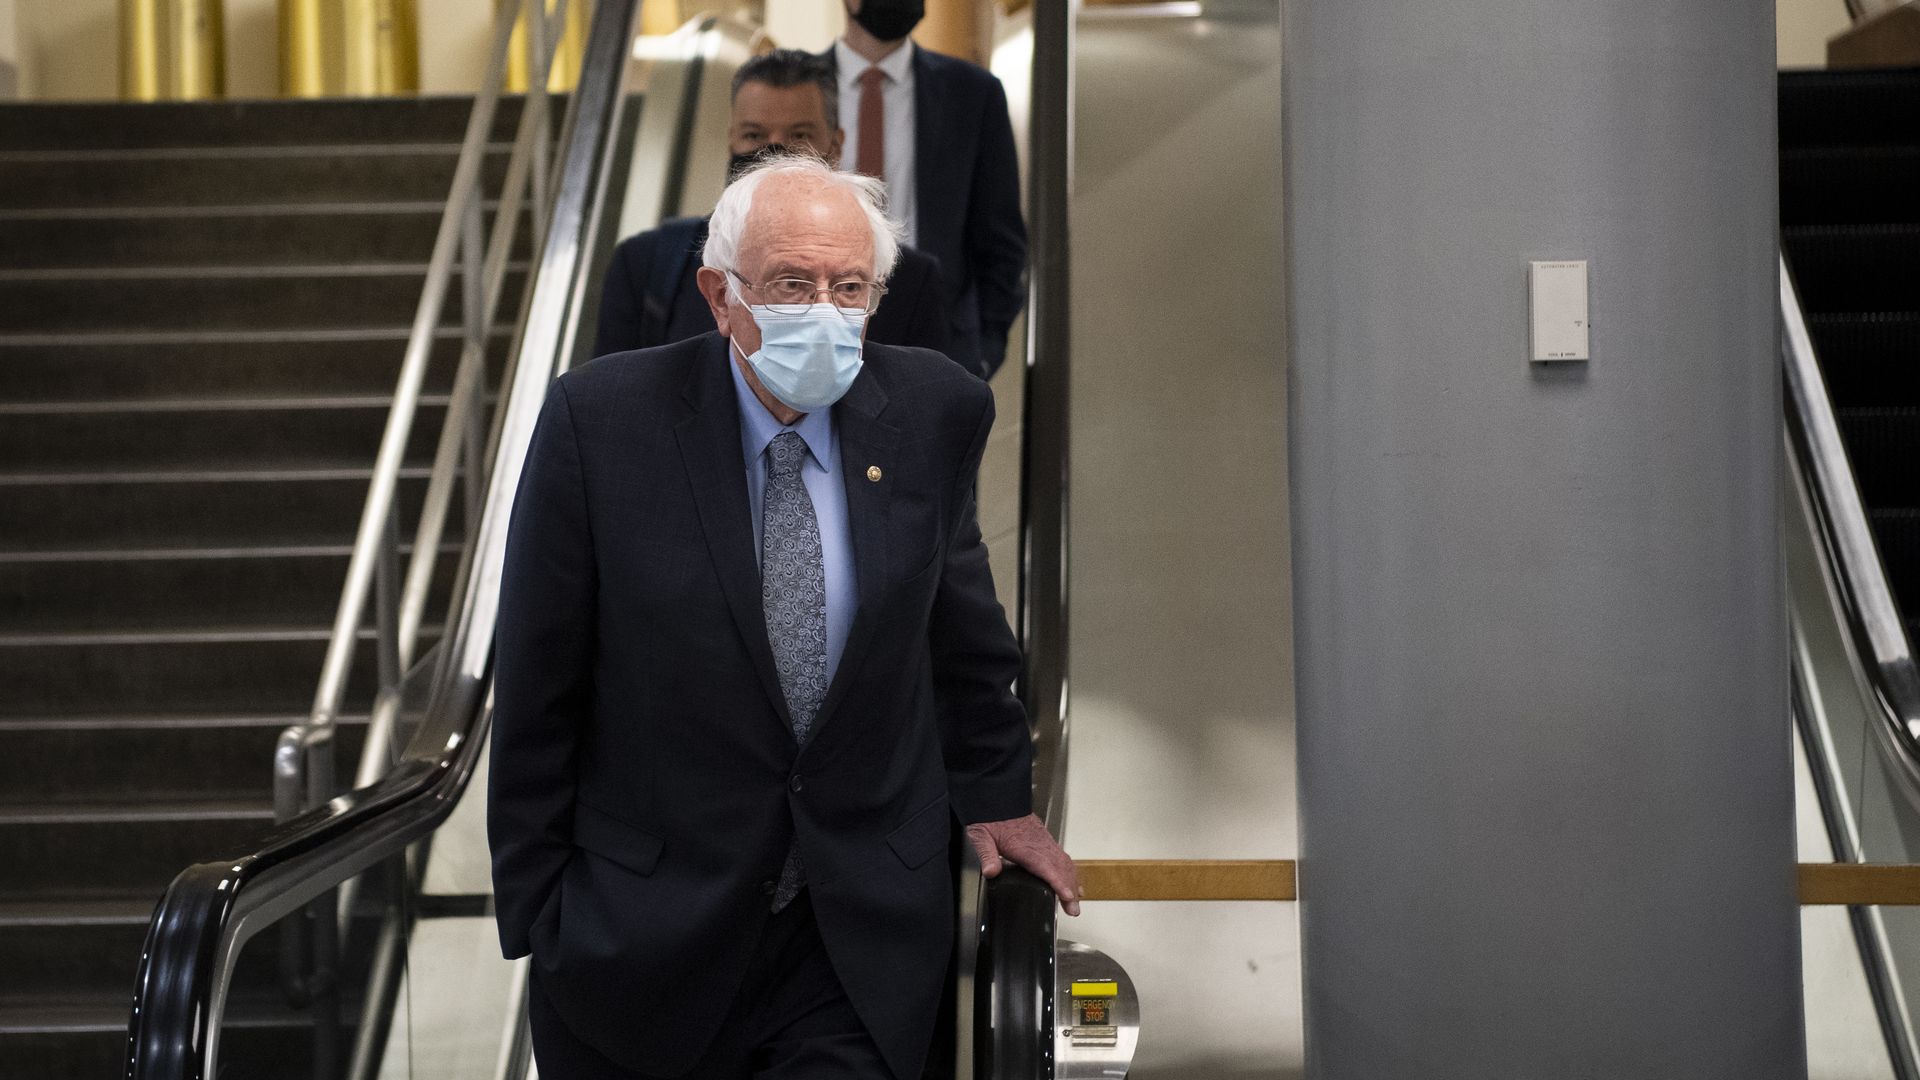  Sen. Bernie Sanders wears a mask while walking back from a vote on the Senate floor.